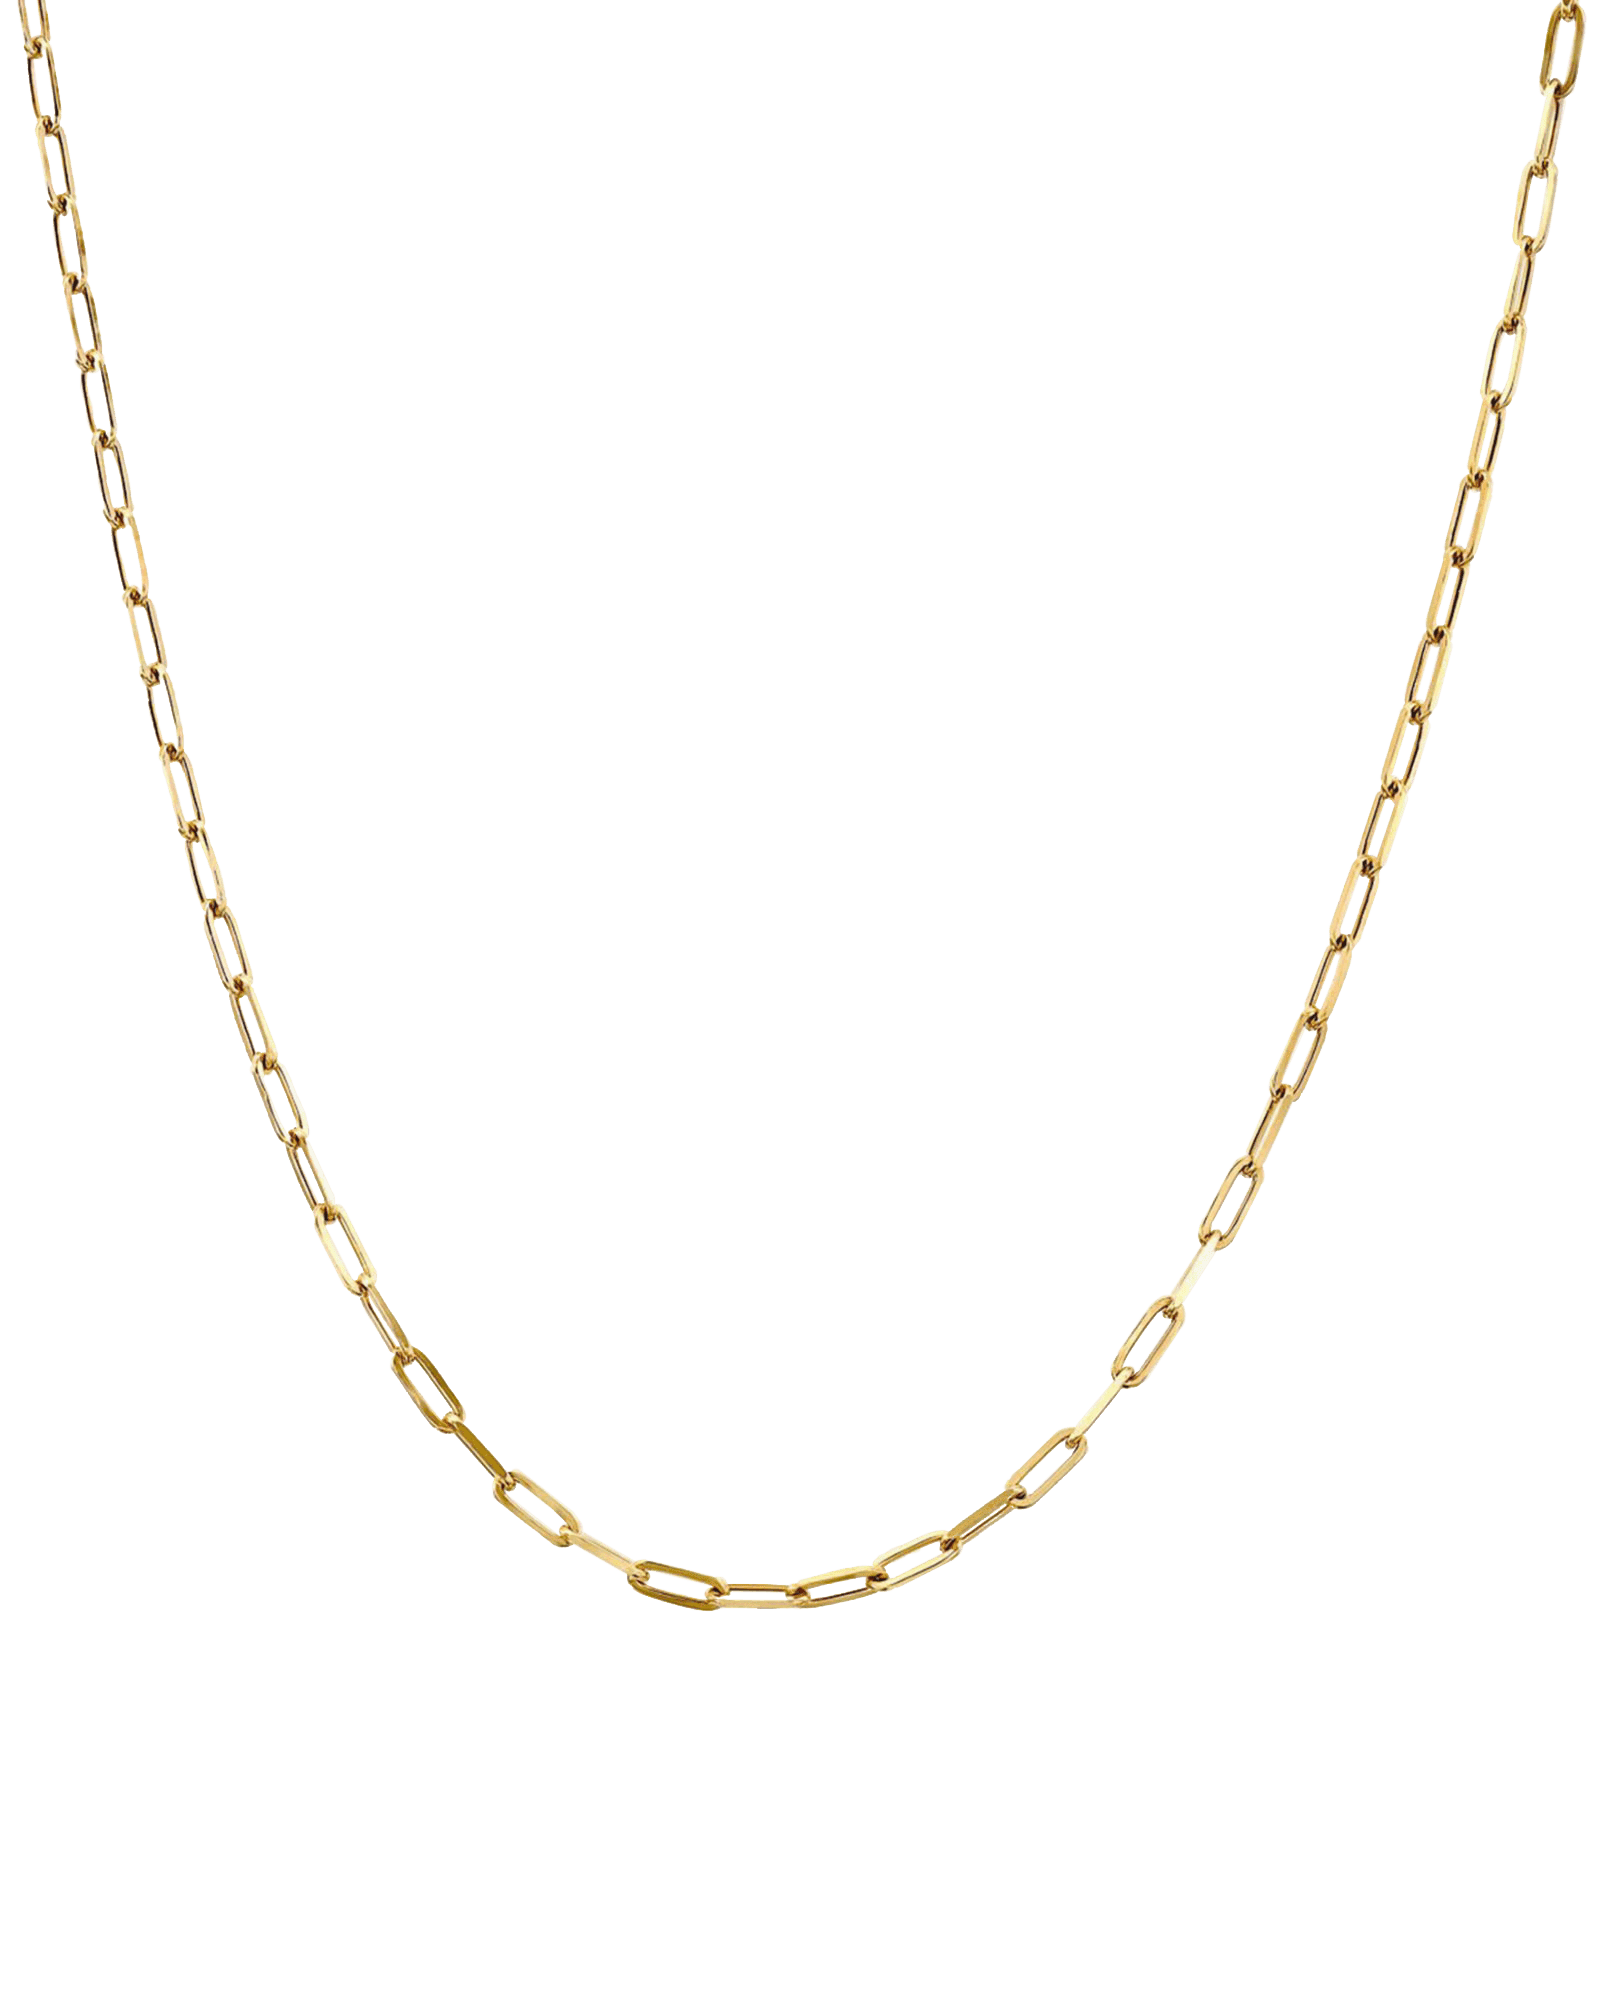 Links Chain Necklace - 18K Gold Vermeil Chains magal-dev 